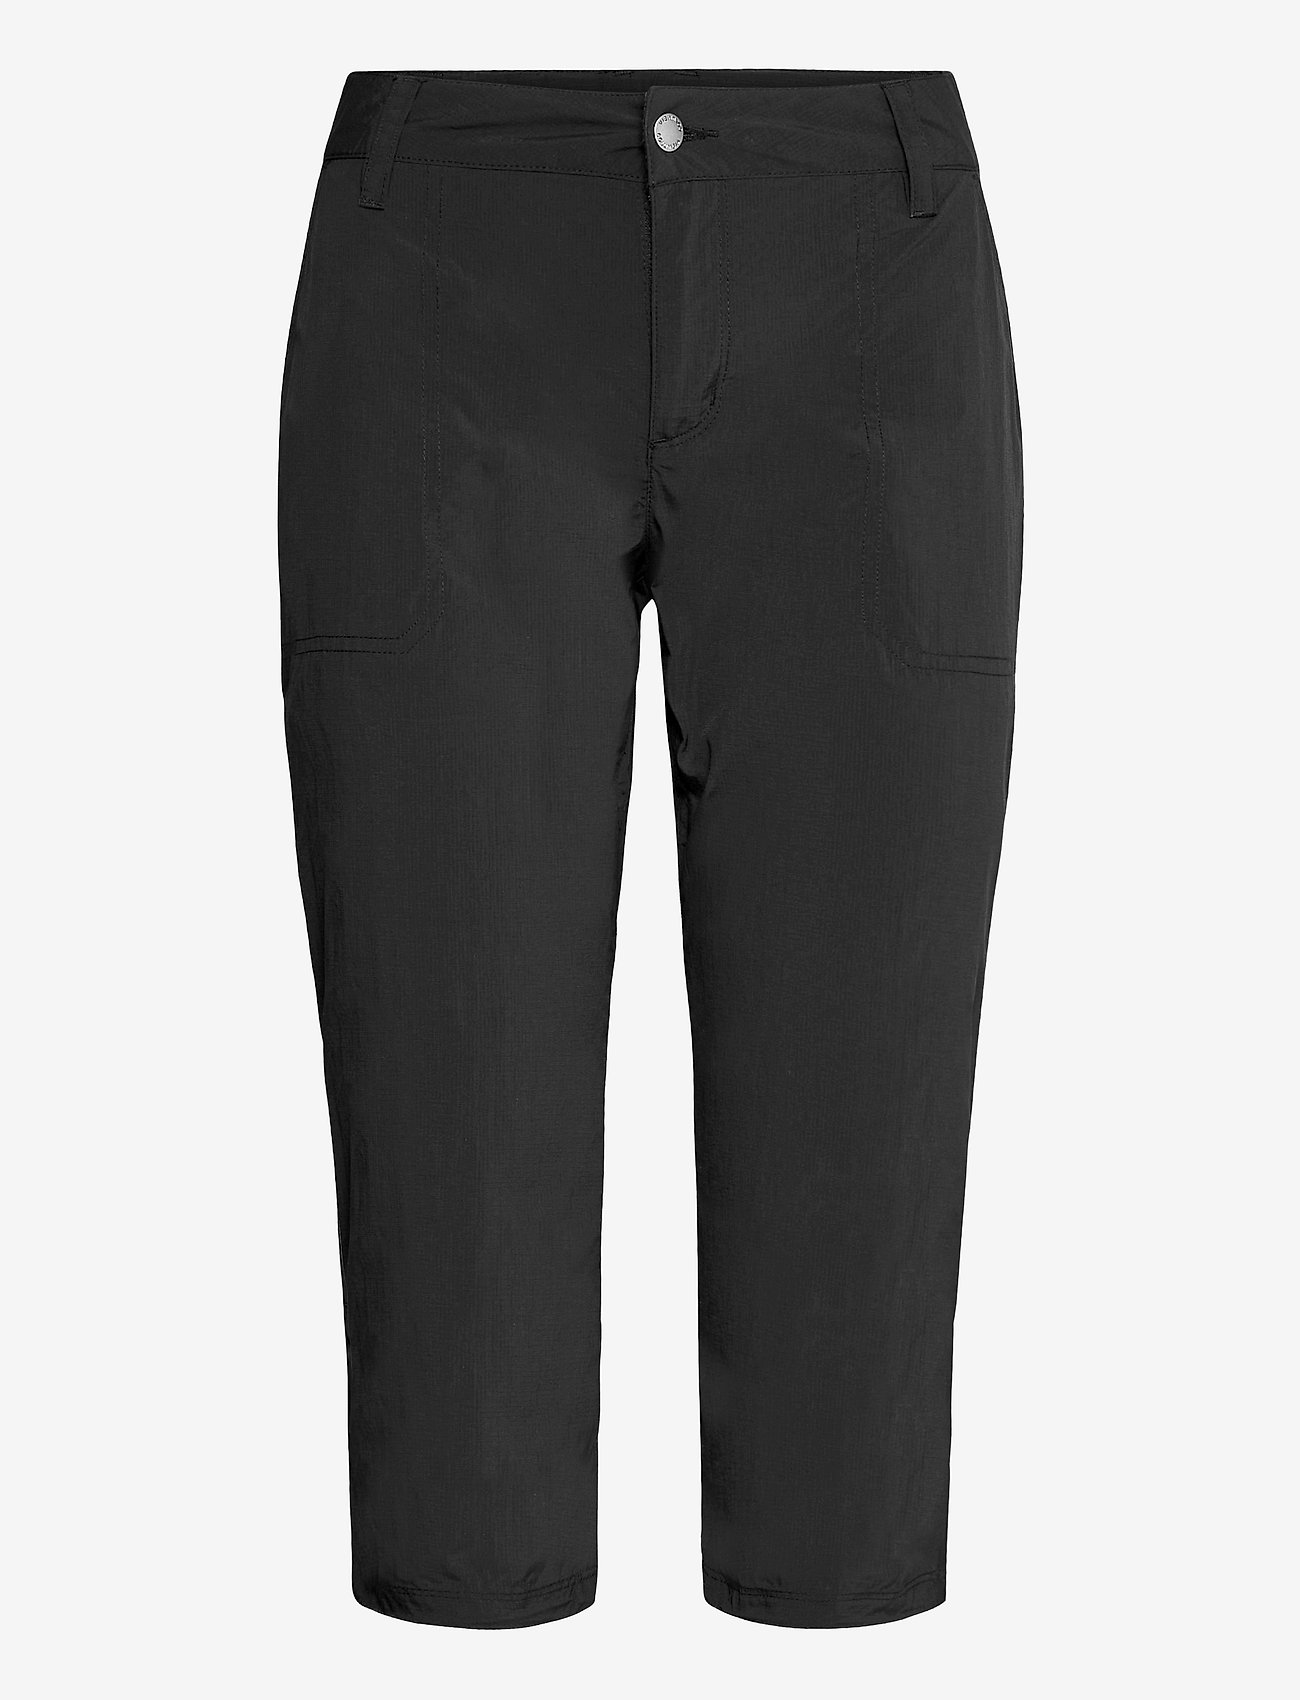 Columbia Sportswear - Silver Ridge™ 2.0 Capri - women - black - 0